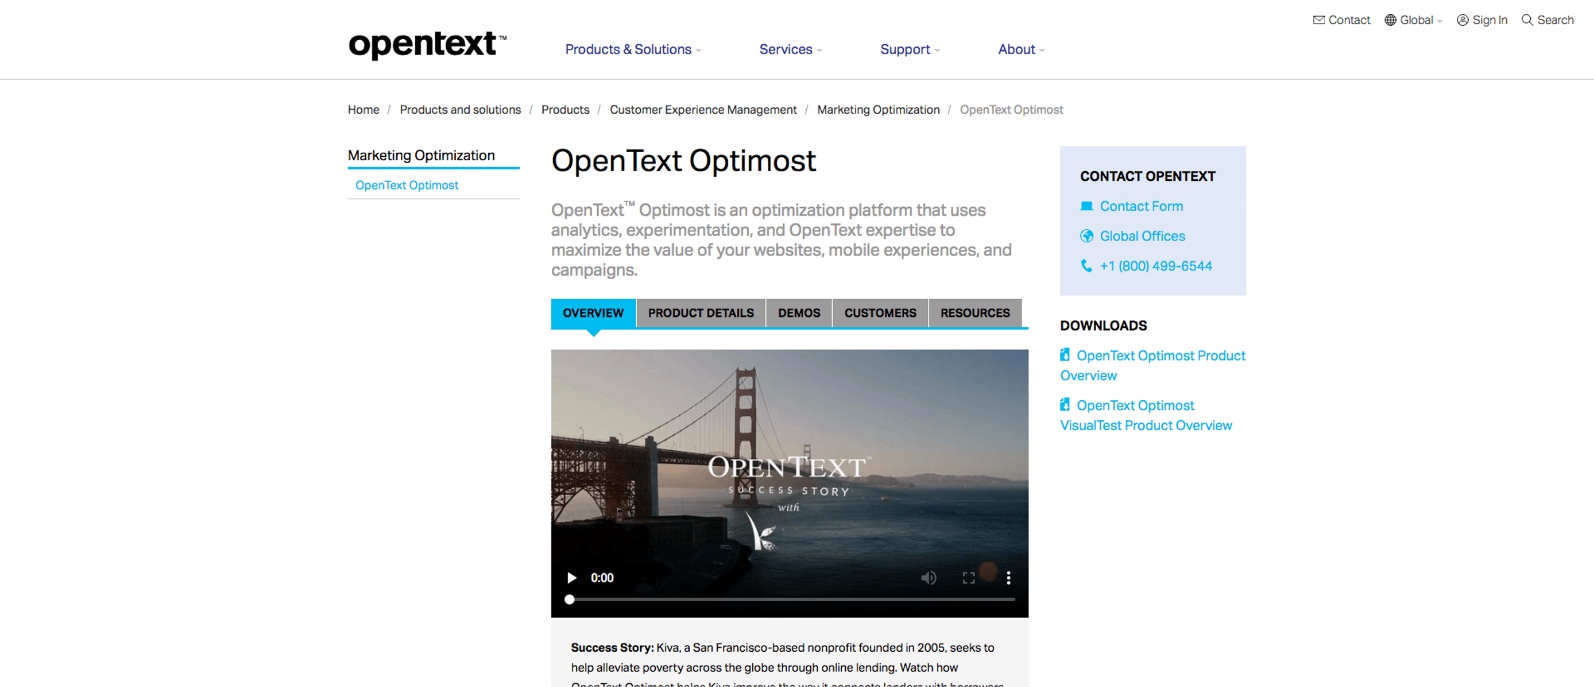 opentext a/b testing tool